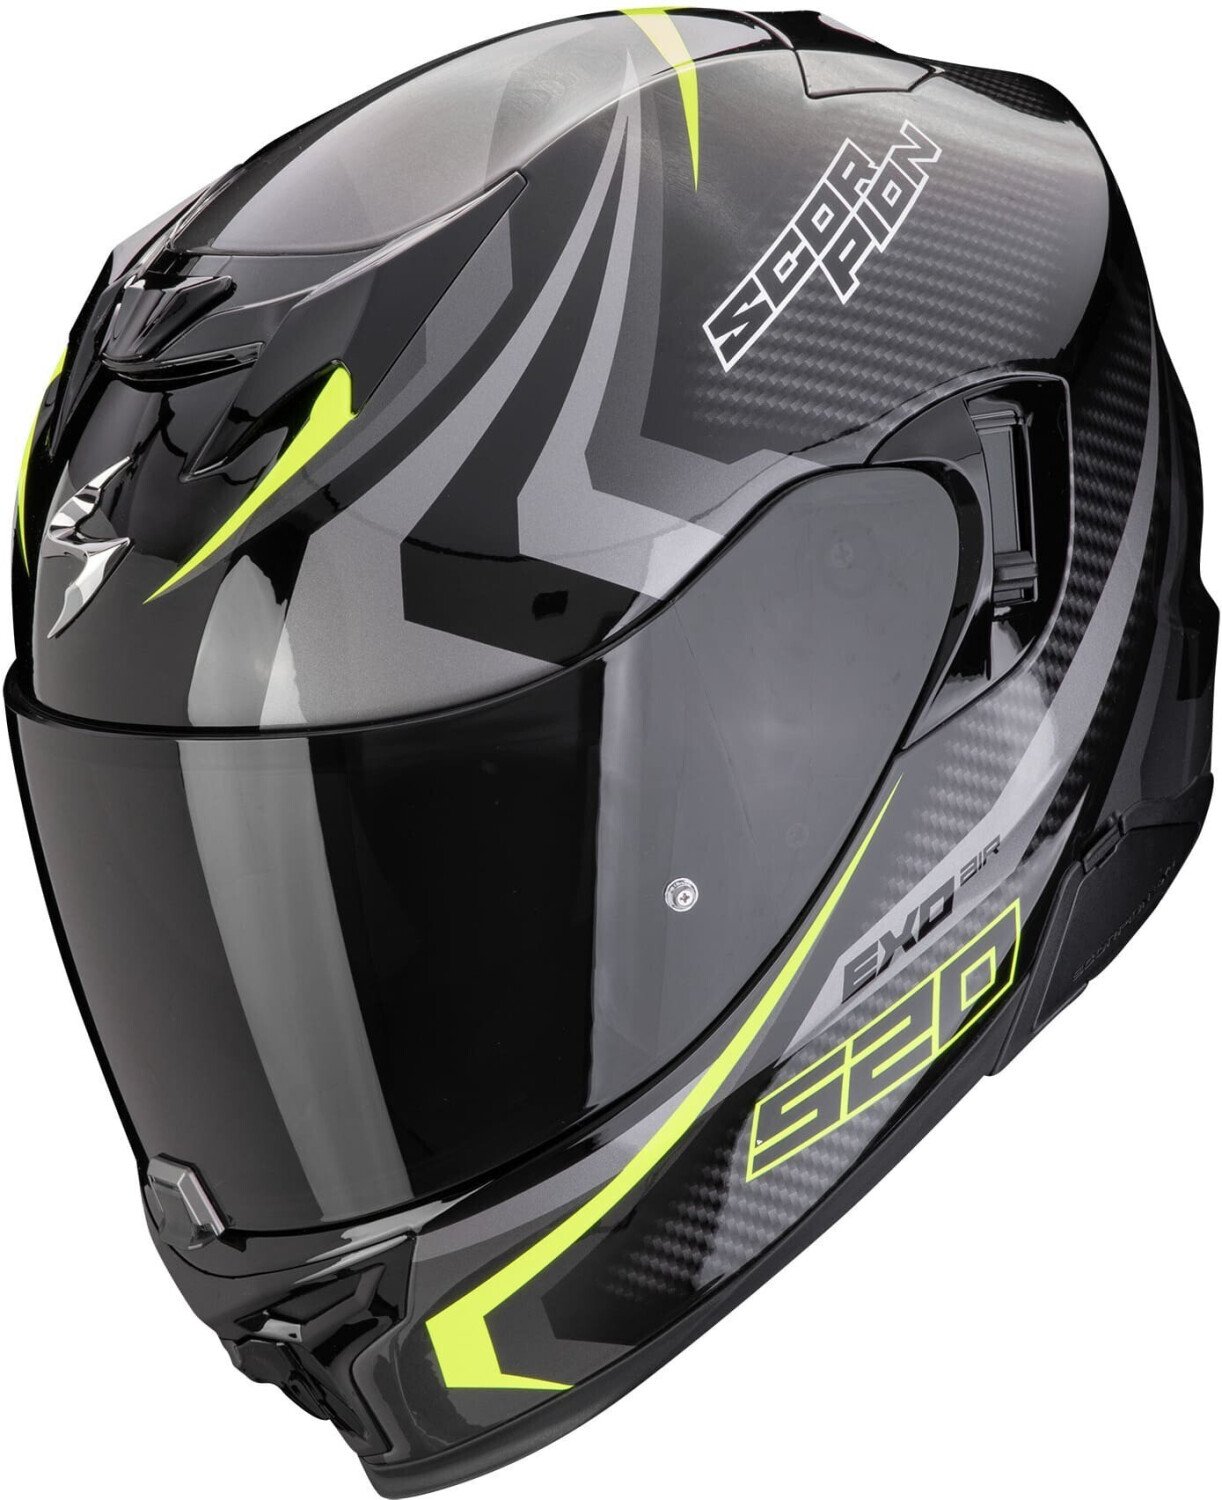 Photos - Motorcycle Helmet Scorpion Exo-520 Evo Air Terra black/silver/neon yellow 